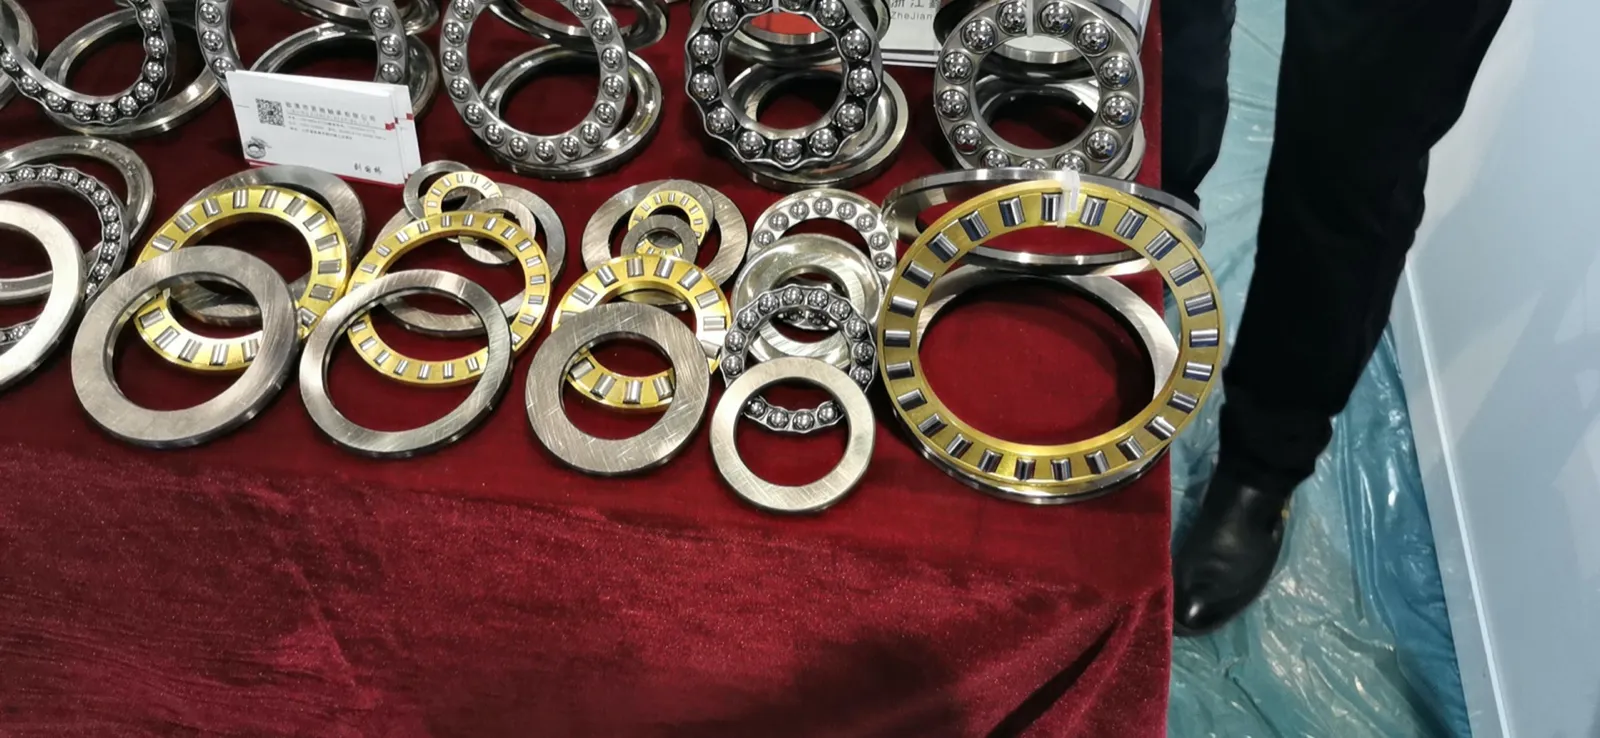 Latest spherical thrust roller bearing manufacturer